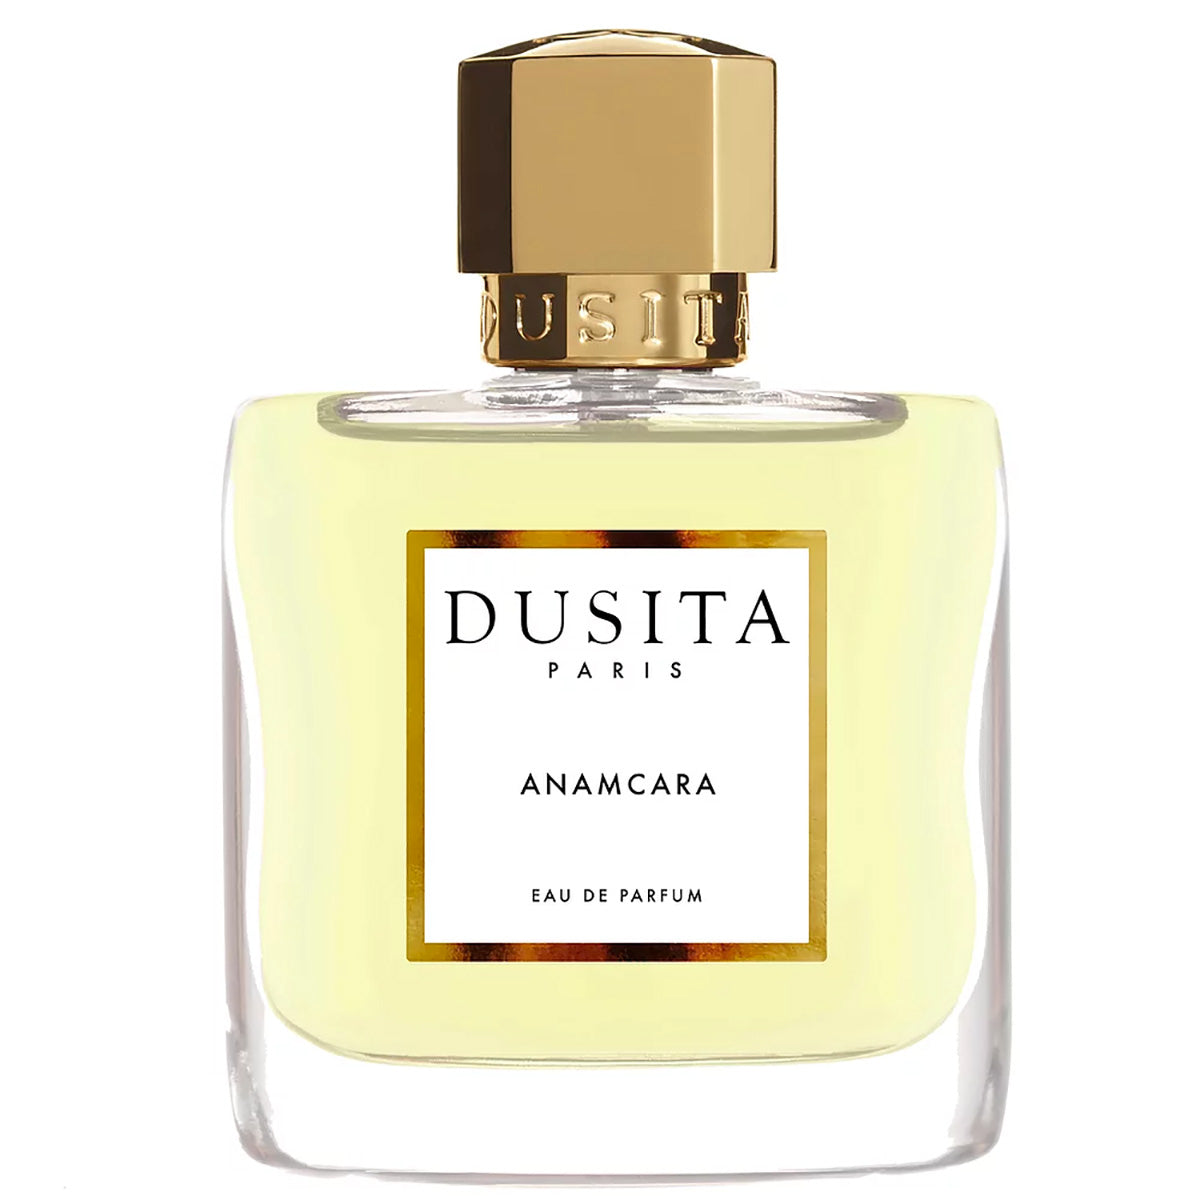 Anamcara by Dusita at Indigo Perfumery